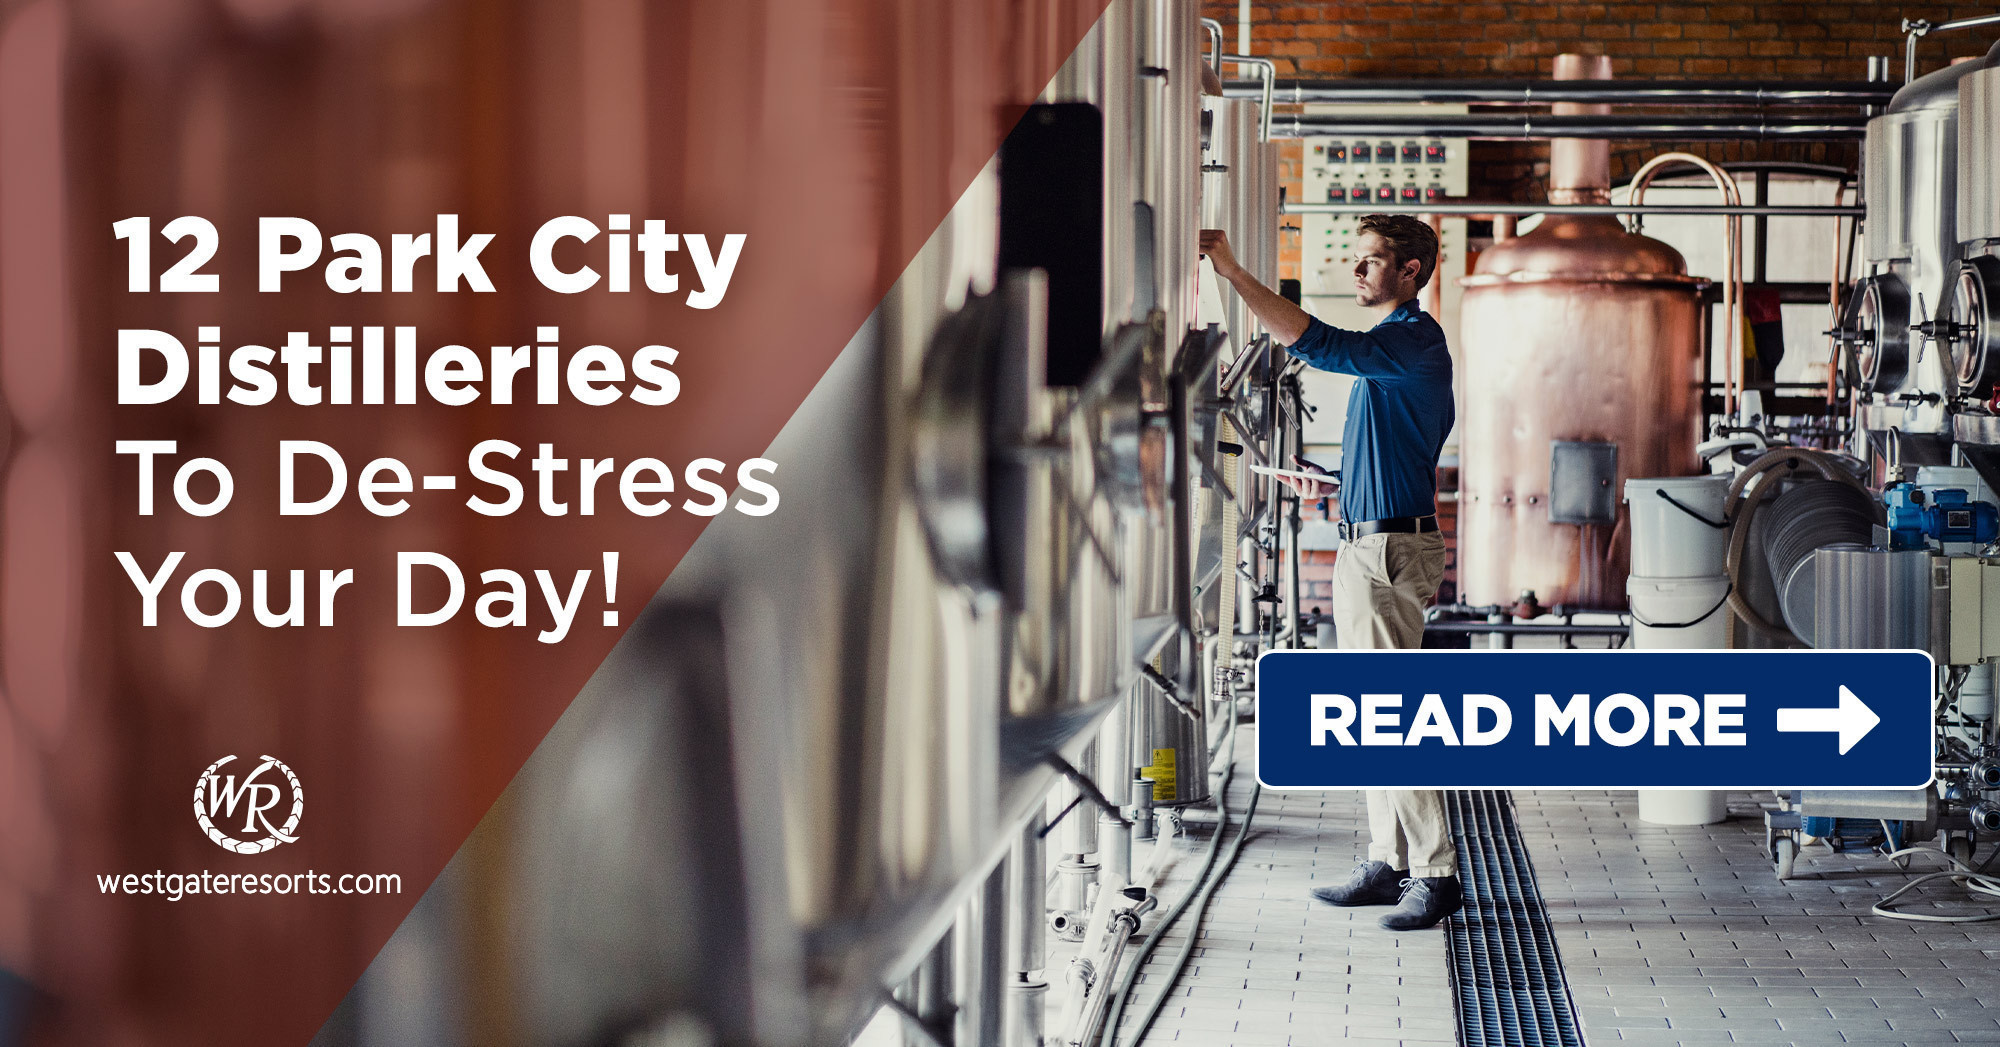 12 Park City Distilleries To De-Stress Your Day! | A Park City Distillery Guide